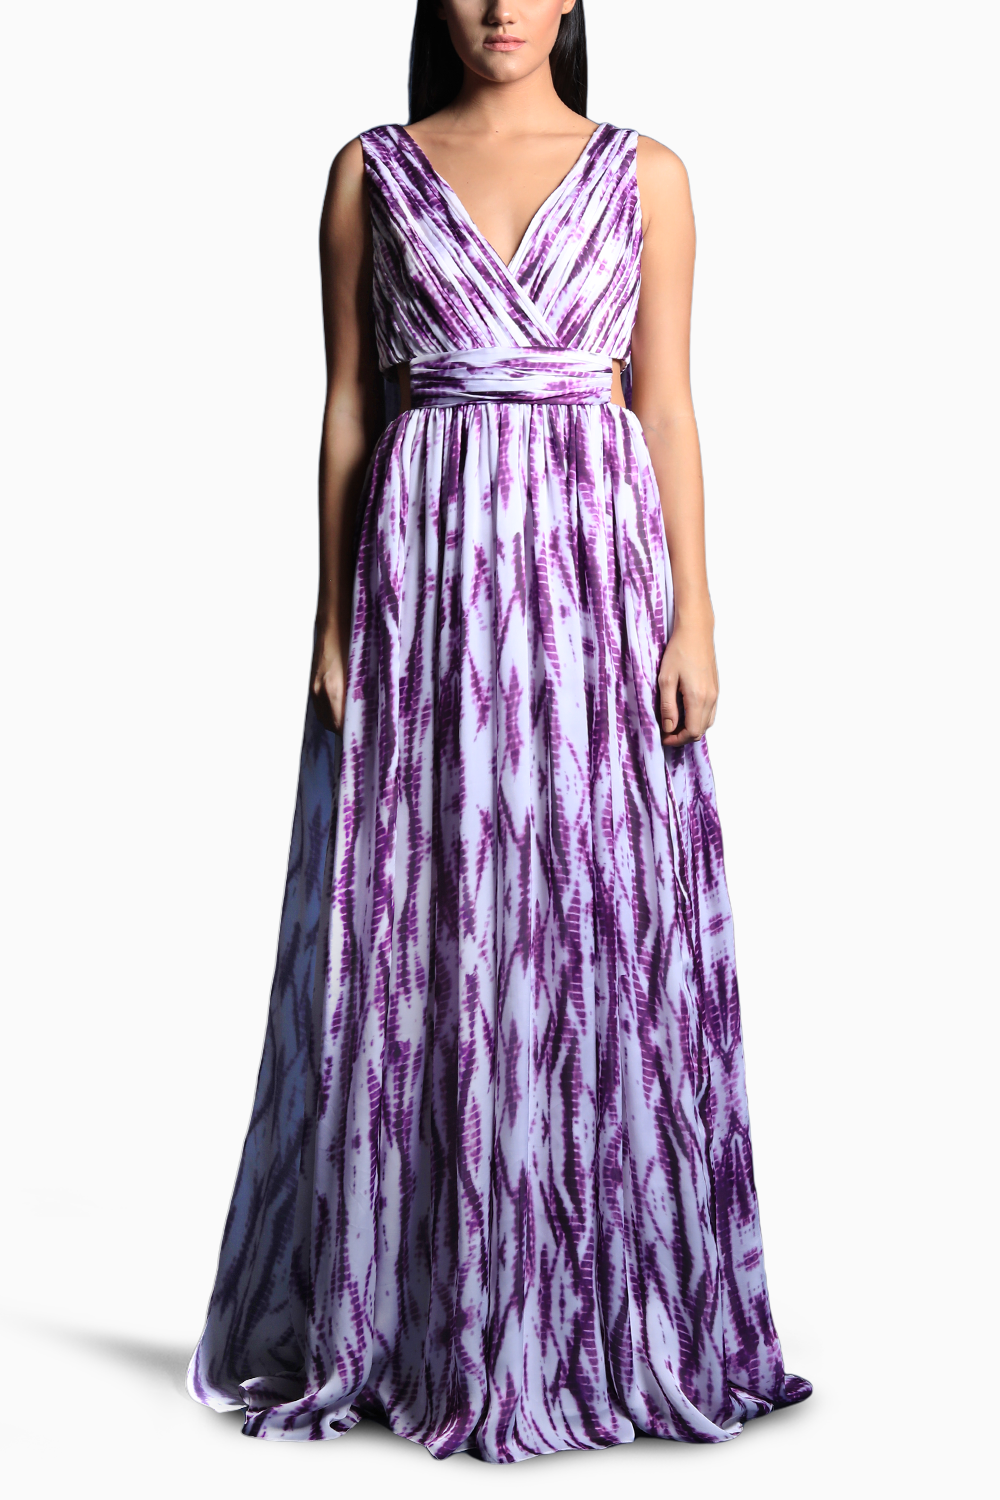 Lavender Dream Gown